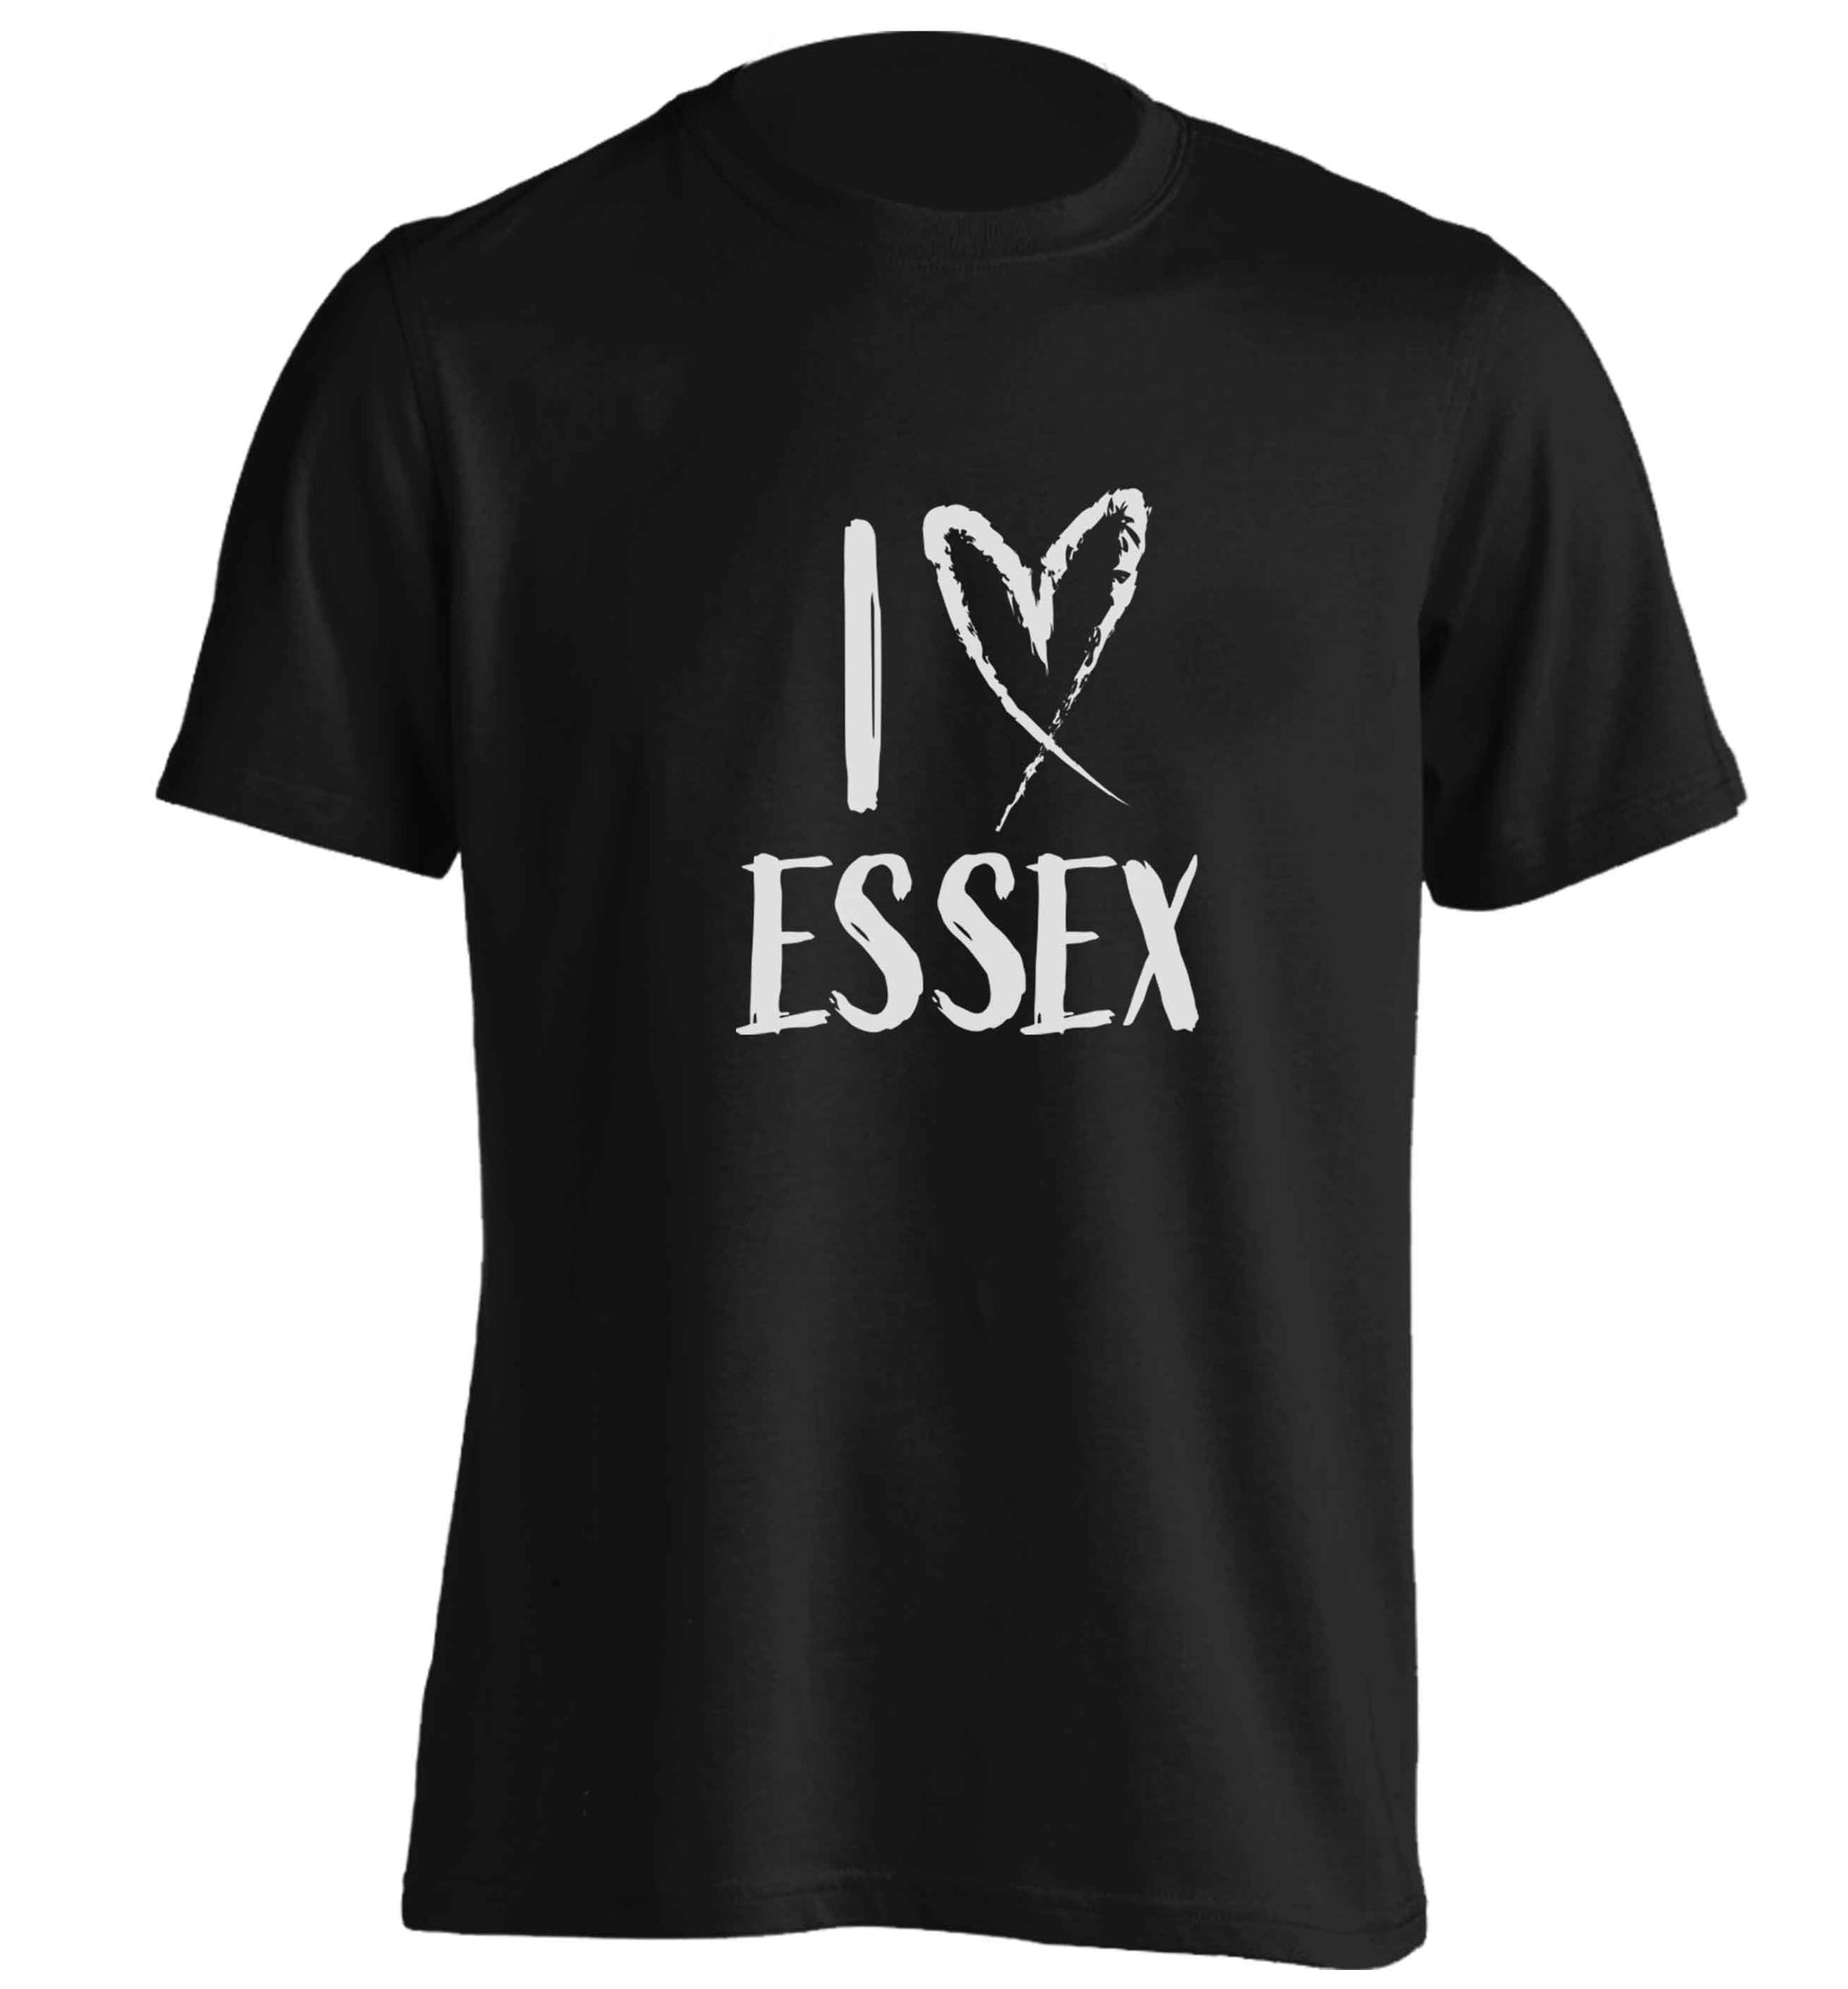 I love Essex adults unisex black Tshirt 2XL